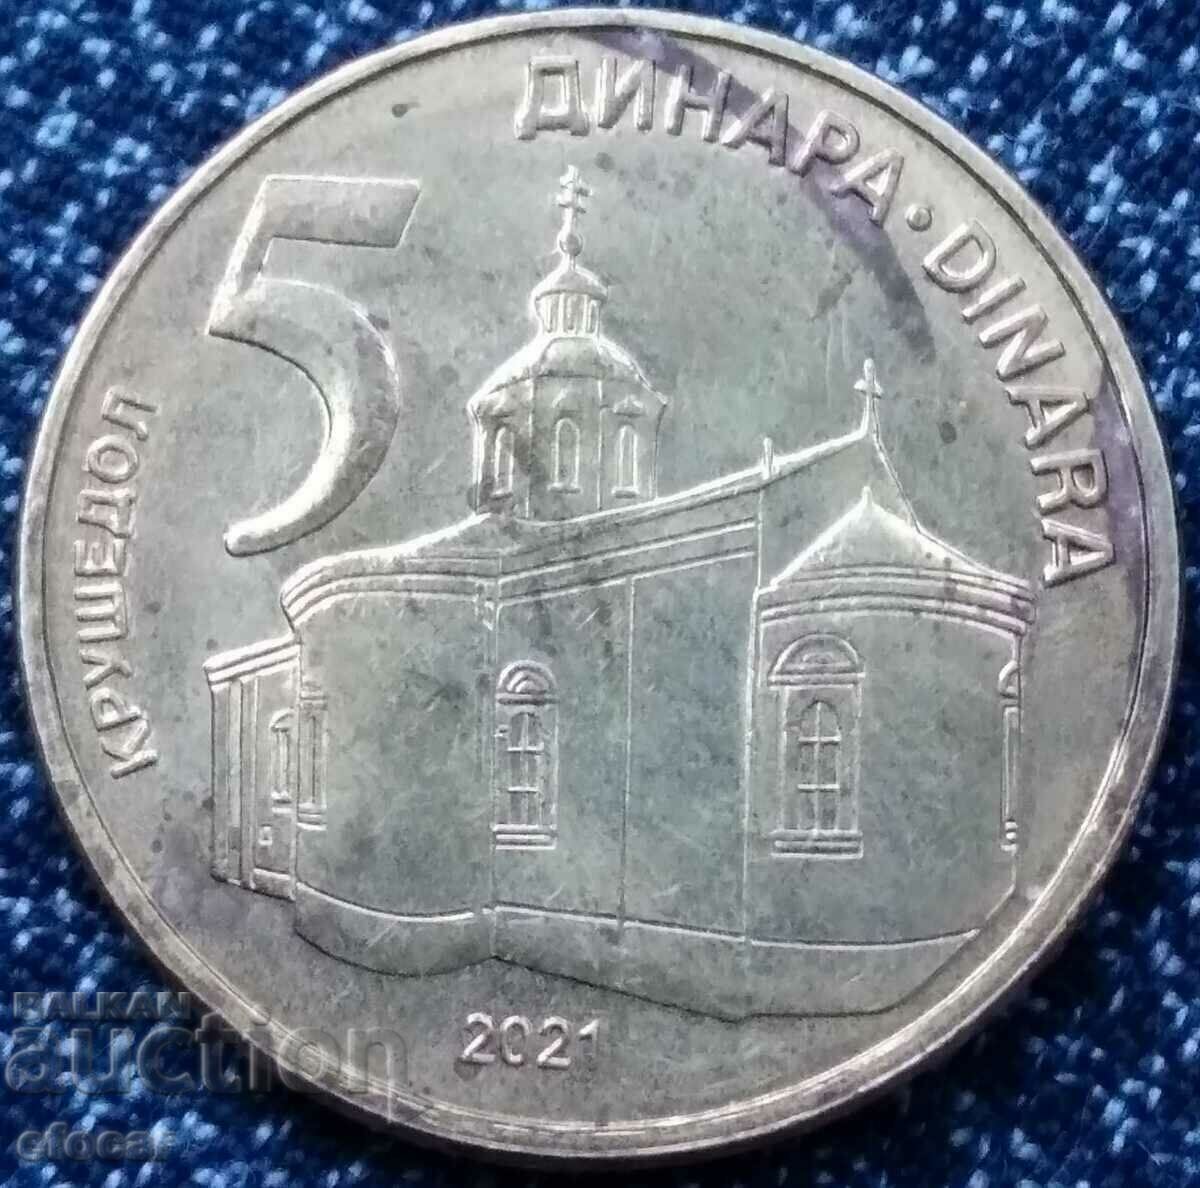 5 dinars Serbia 2021